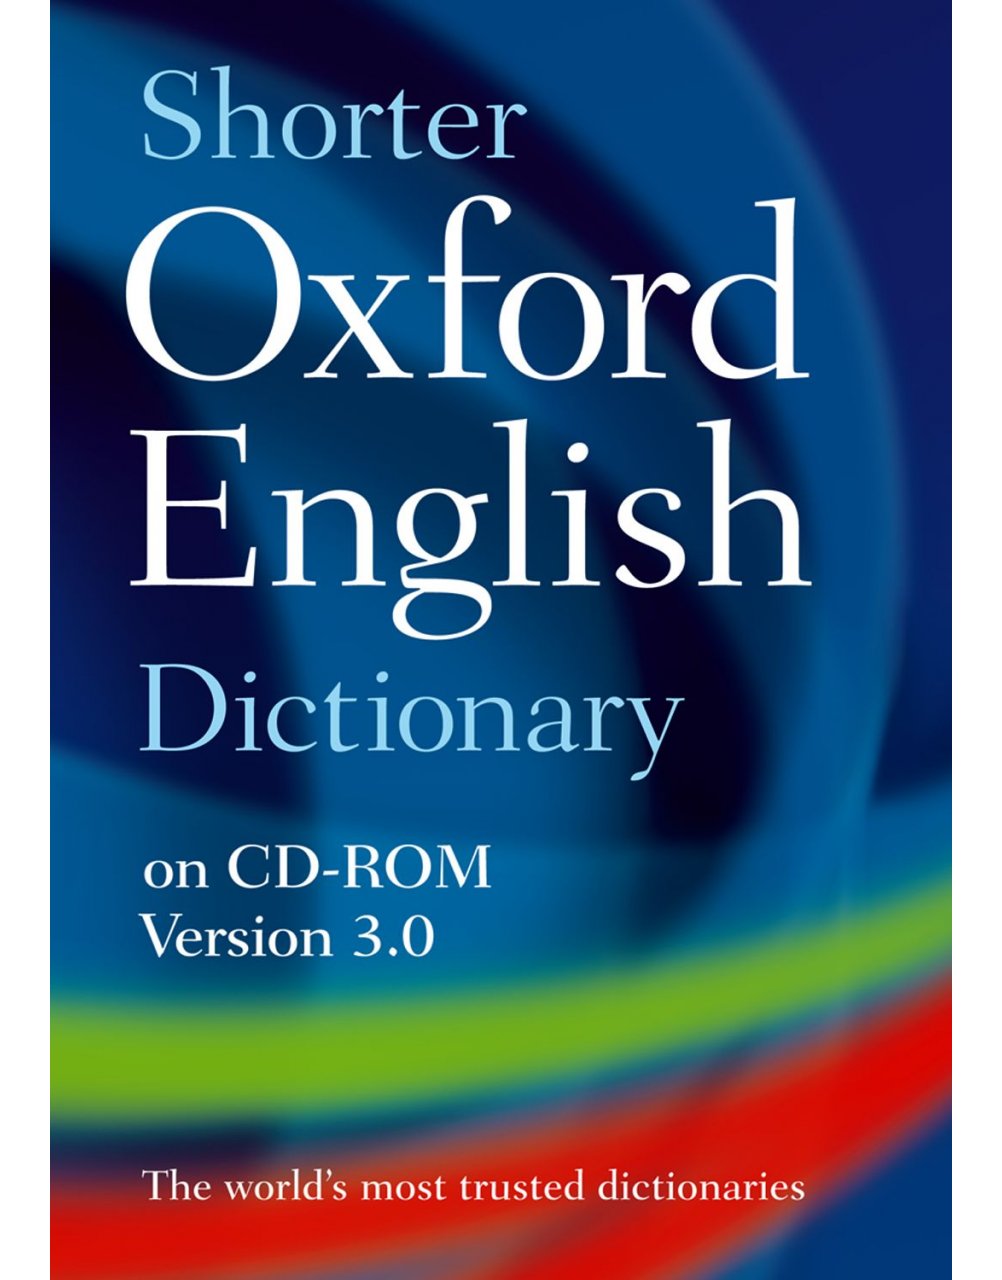 shorter oxford english dictionary app